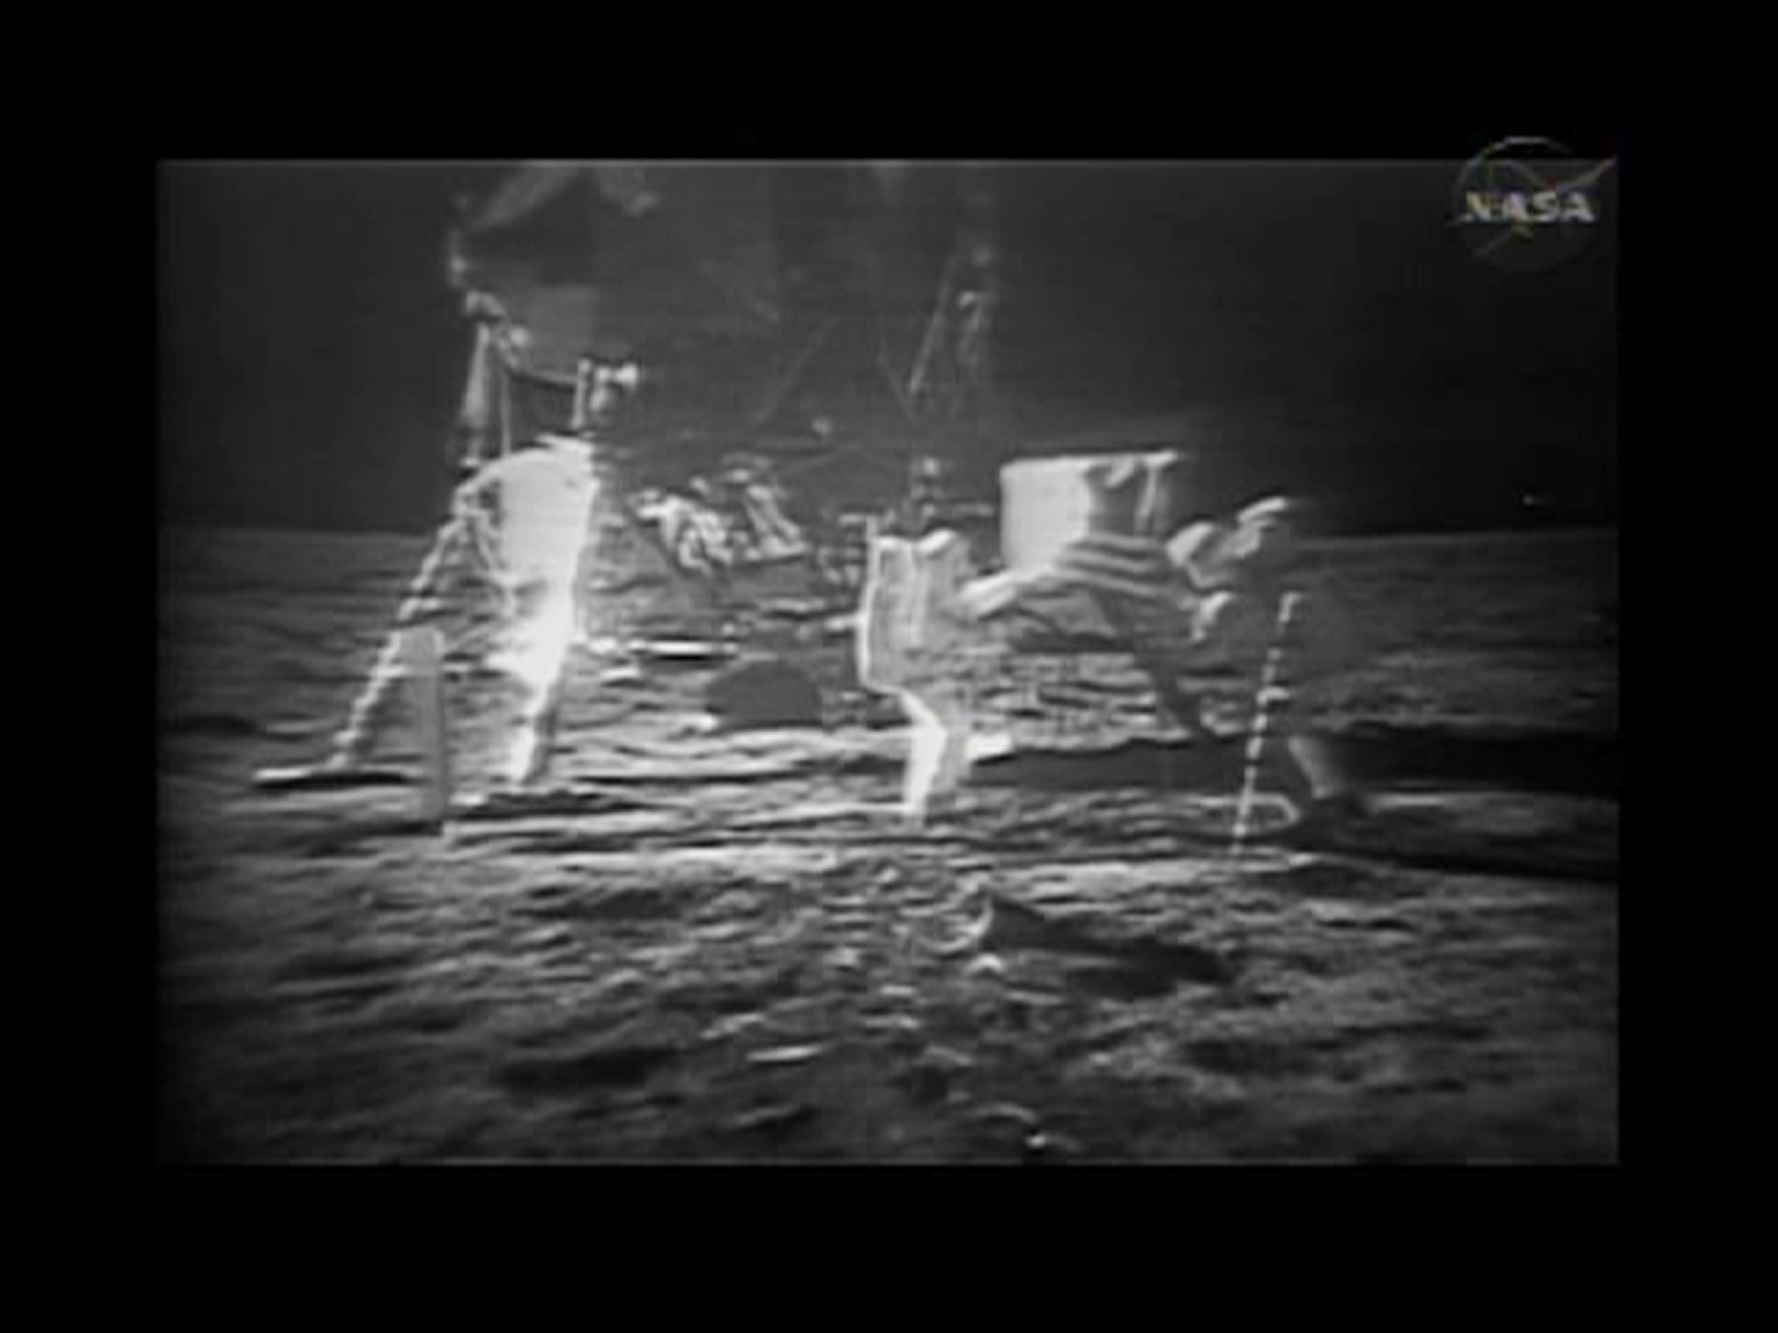 Nasa Lost Video Of Moon Landing The Spokesman Review